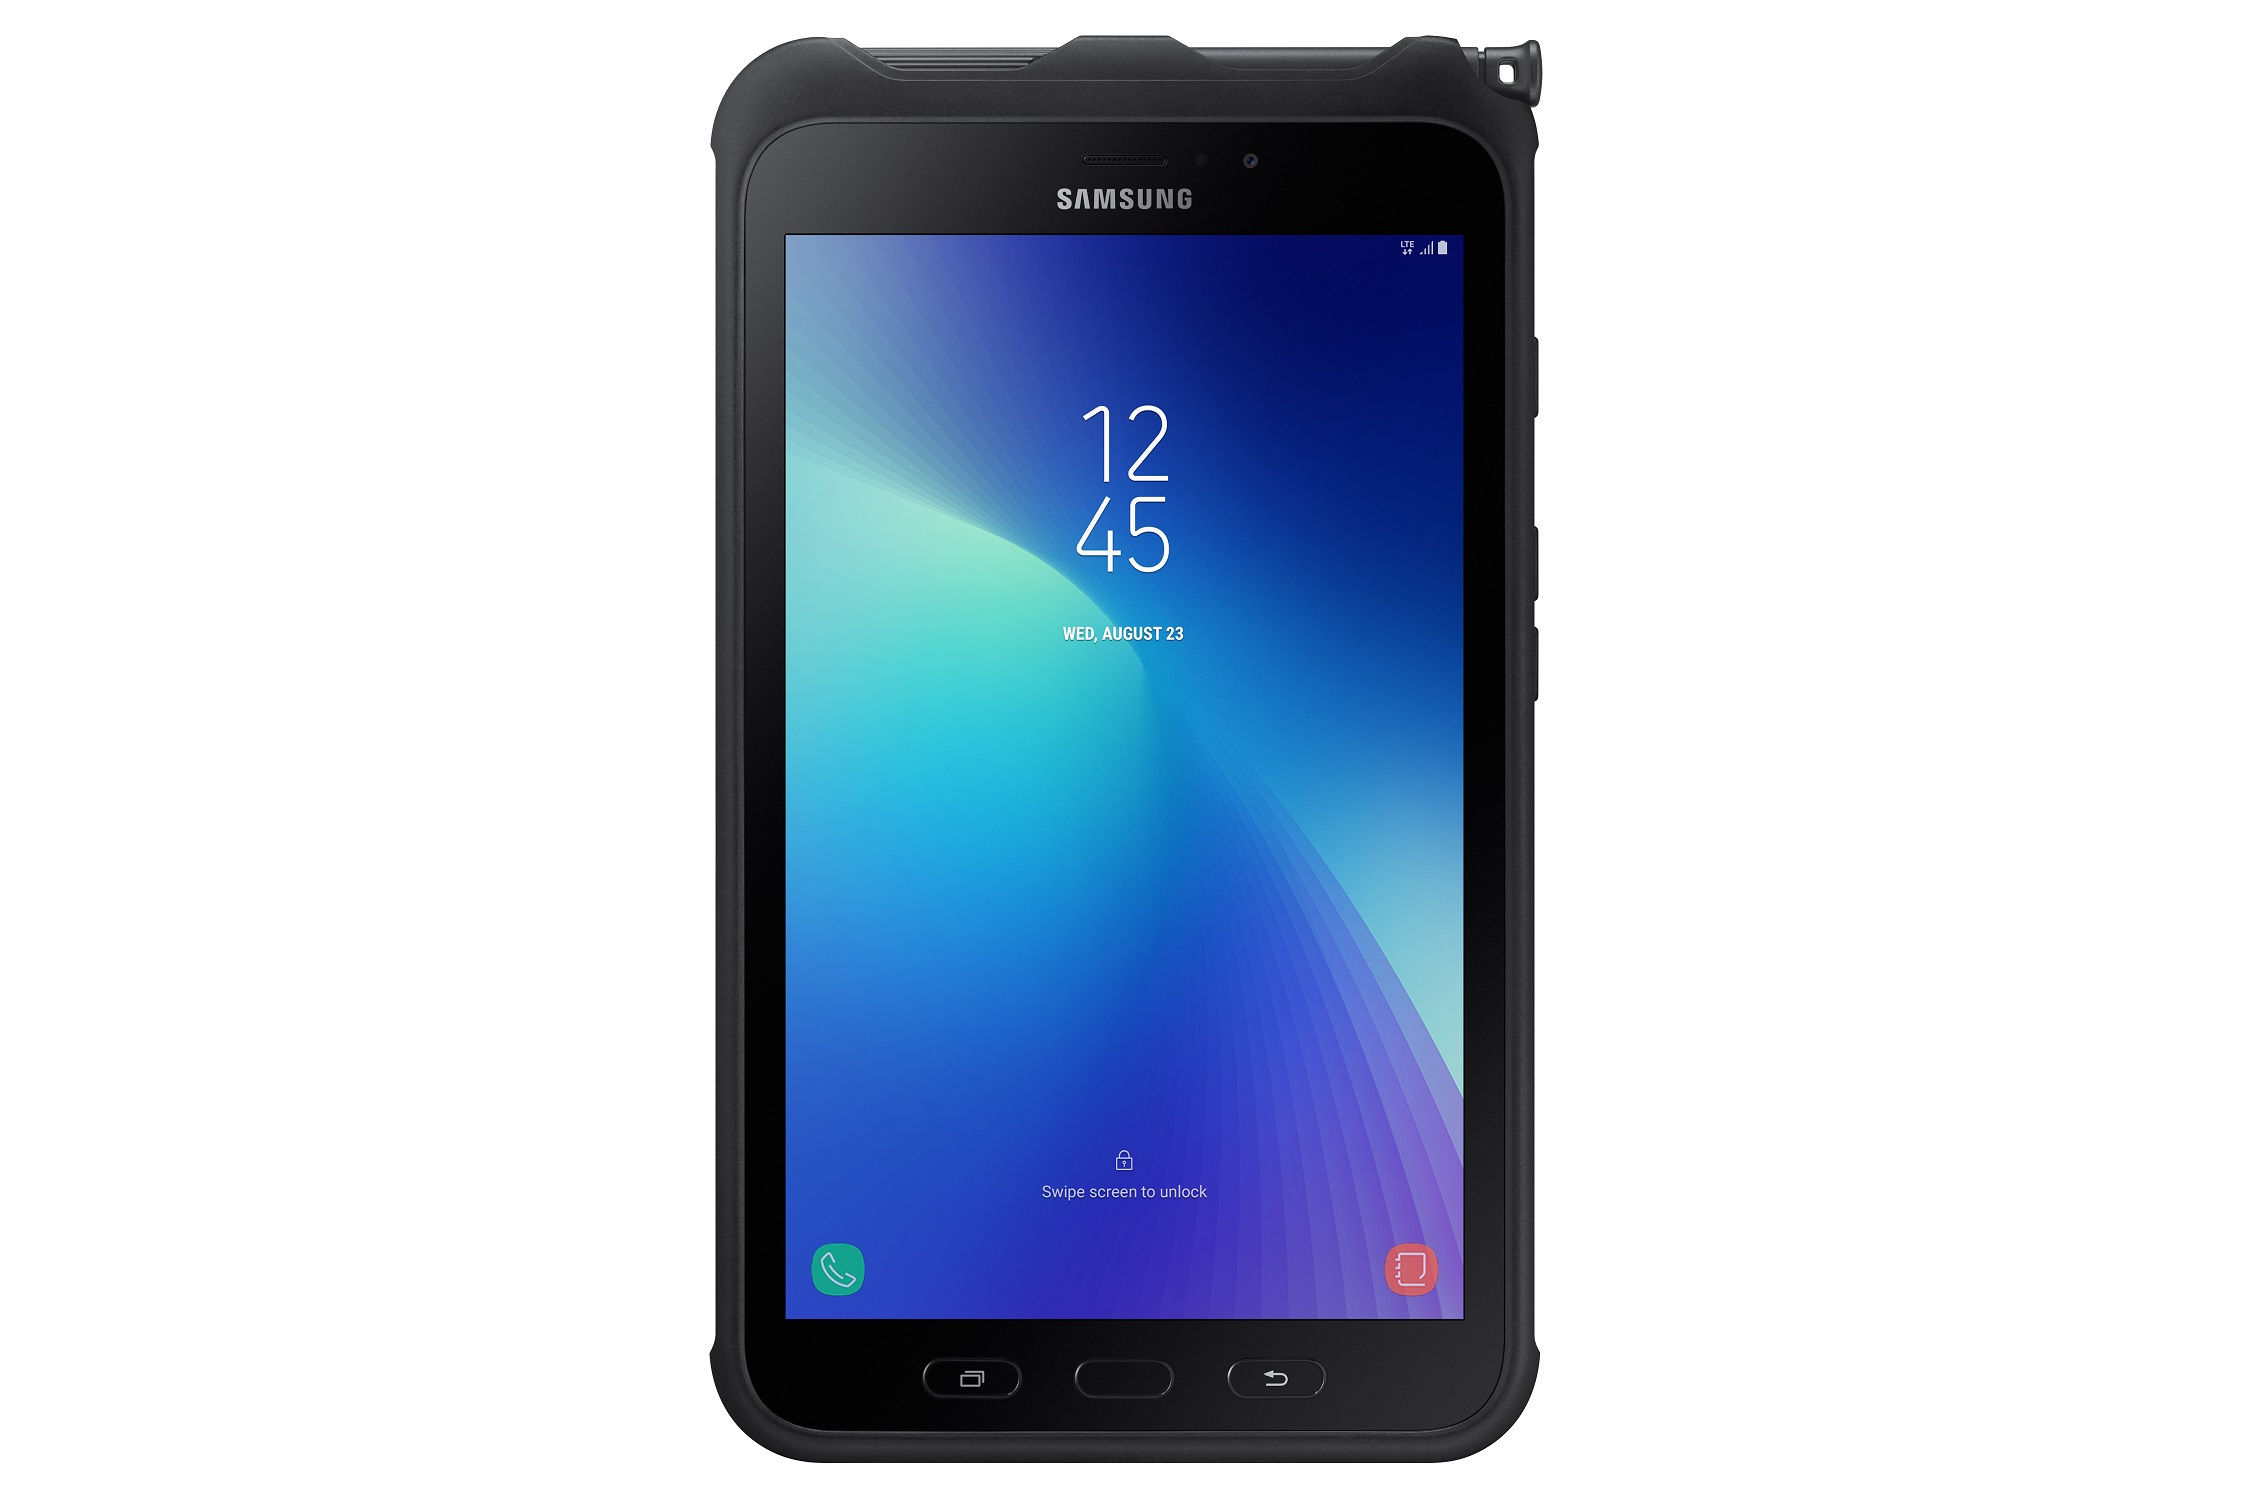 Strapa tabletet mutatott be a Samsung